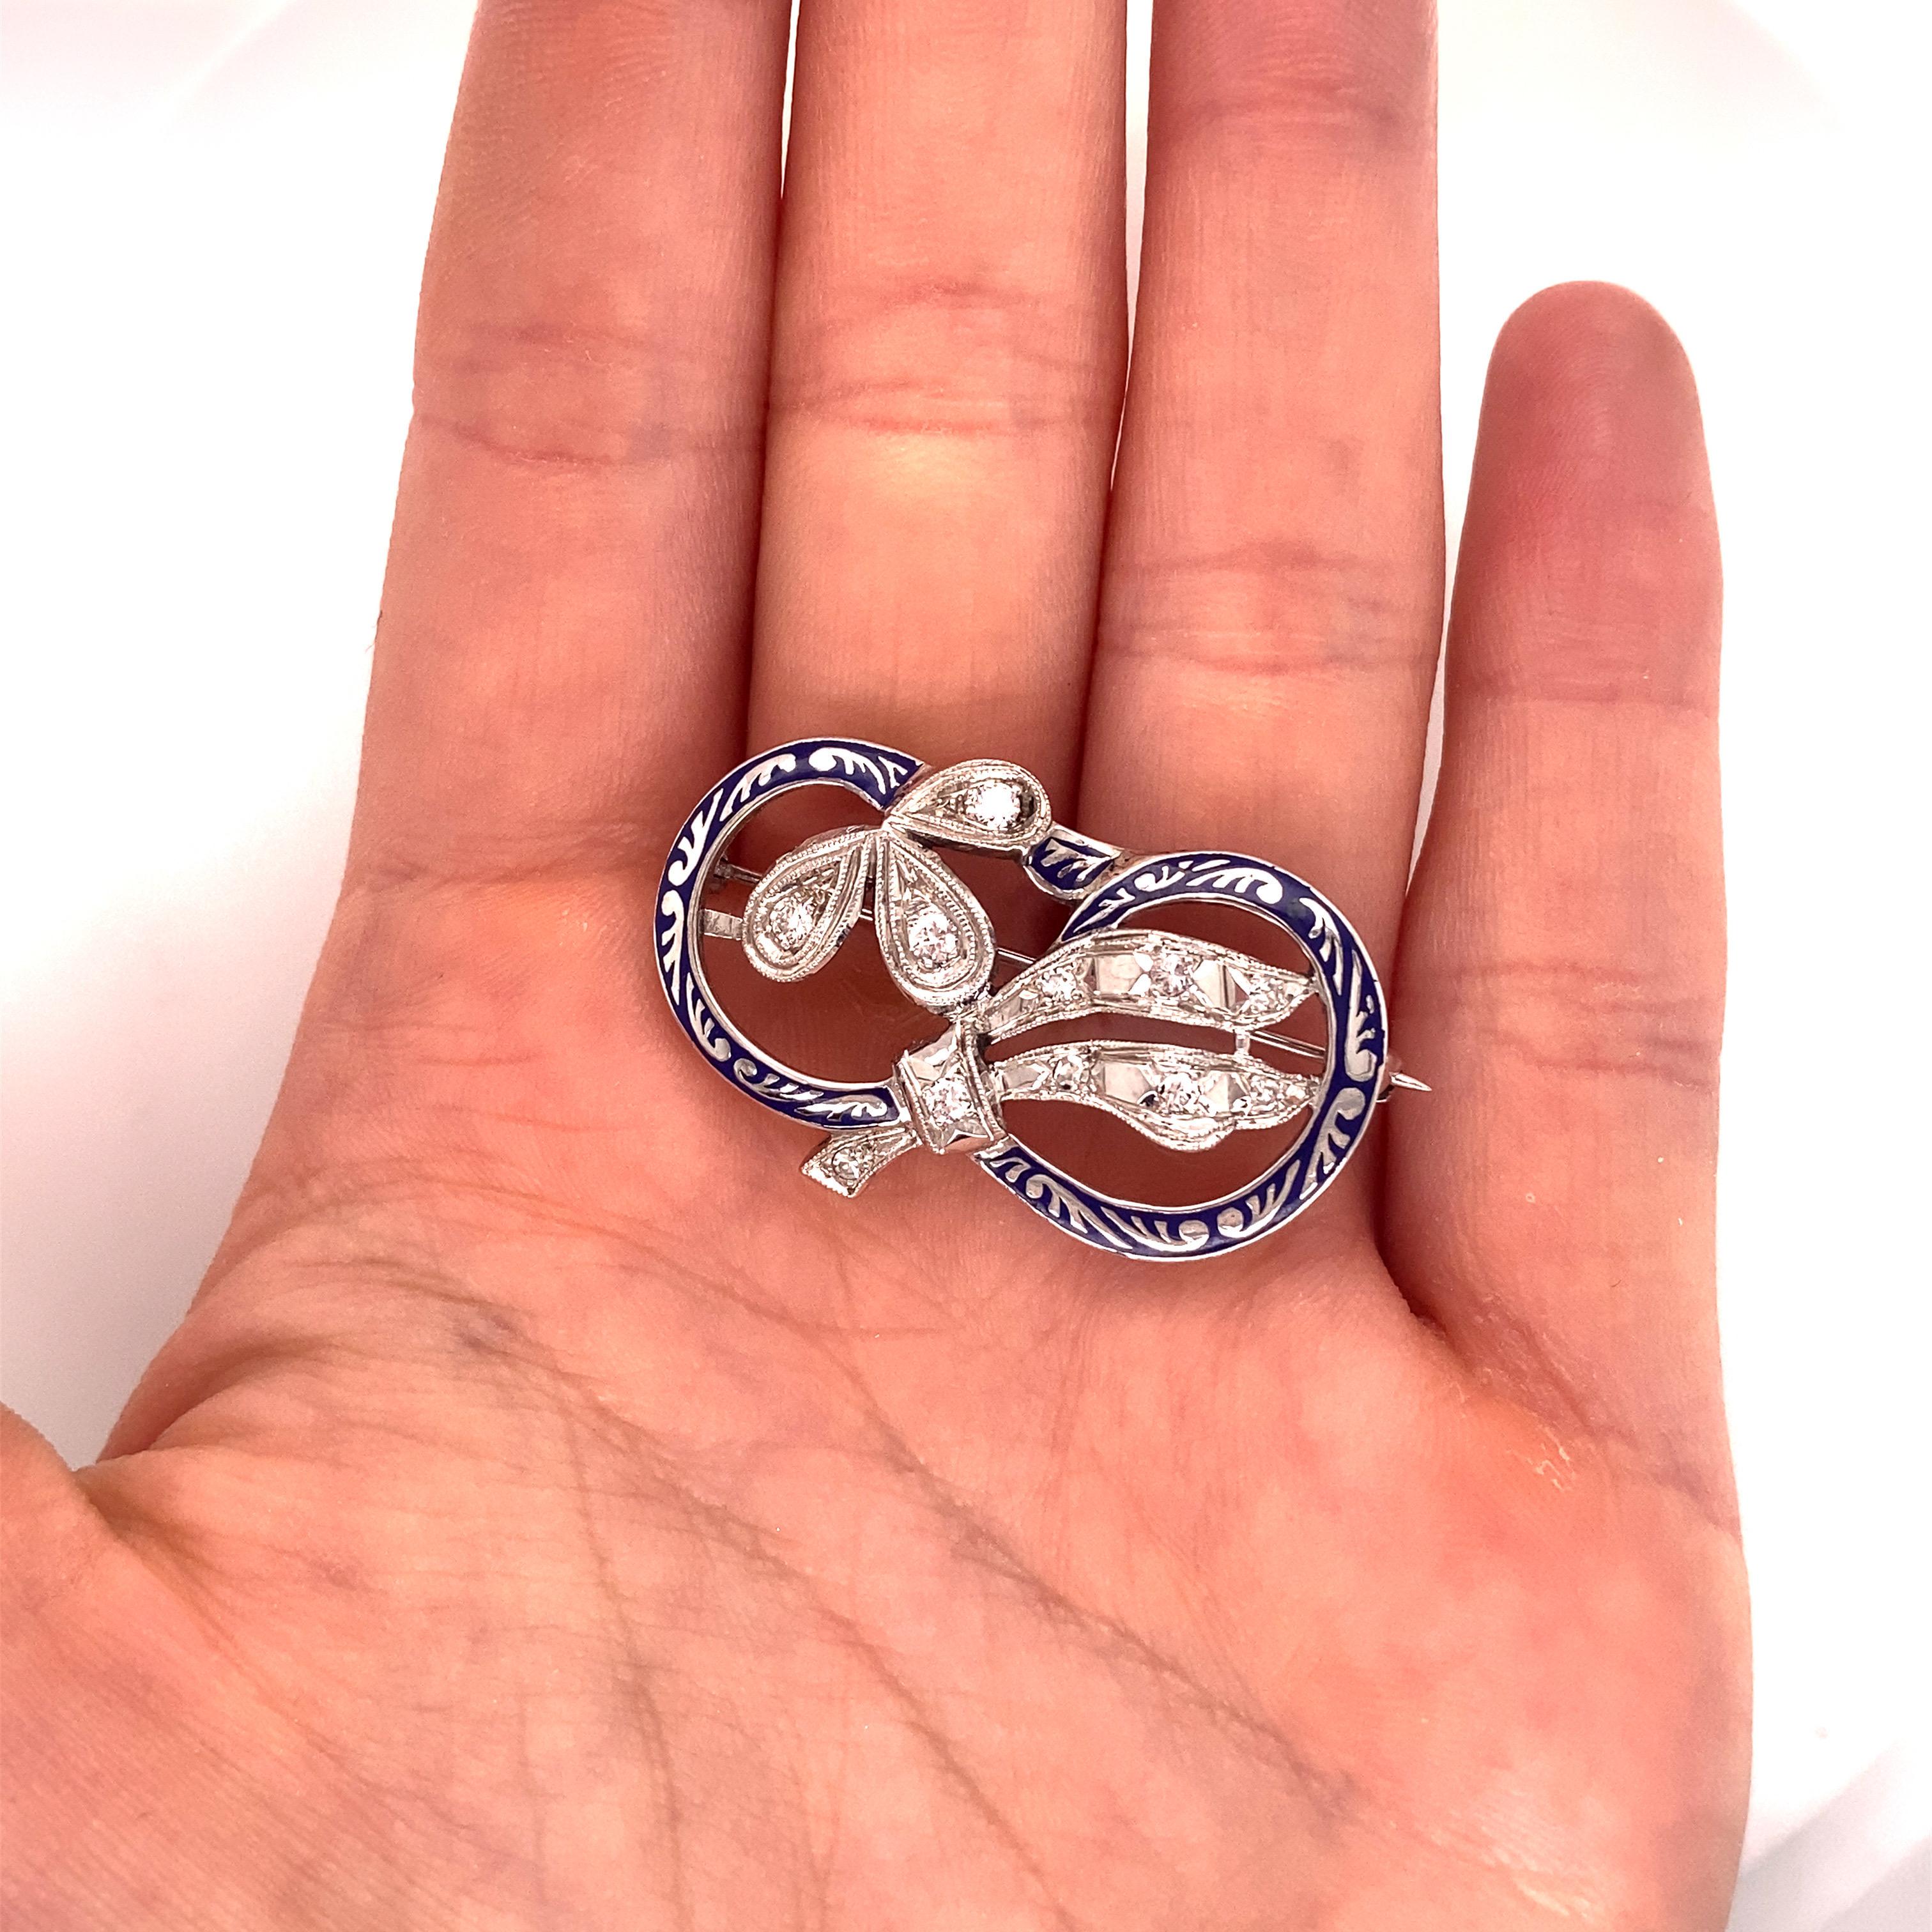 Women's Vintage 1950’s 14k White Gold Diamond and Blue Enamel Pin For Sale